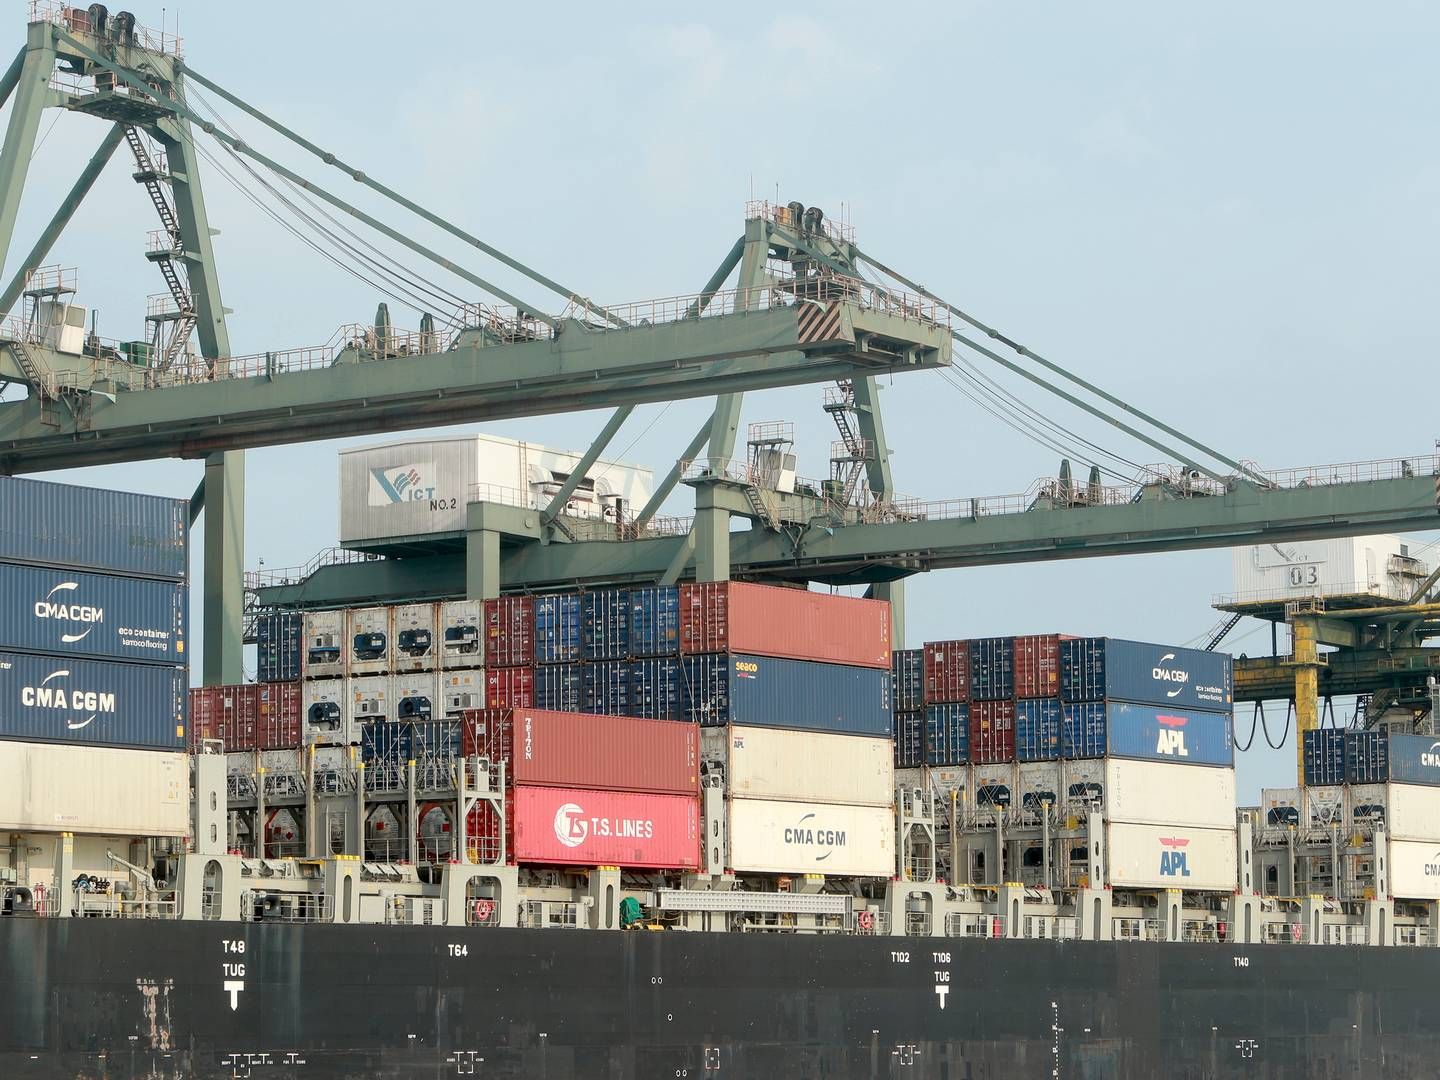 Containere bliver lastet i havnen i Ho Chi Minh City, Vietnam.